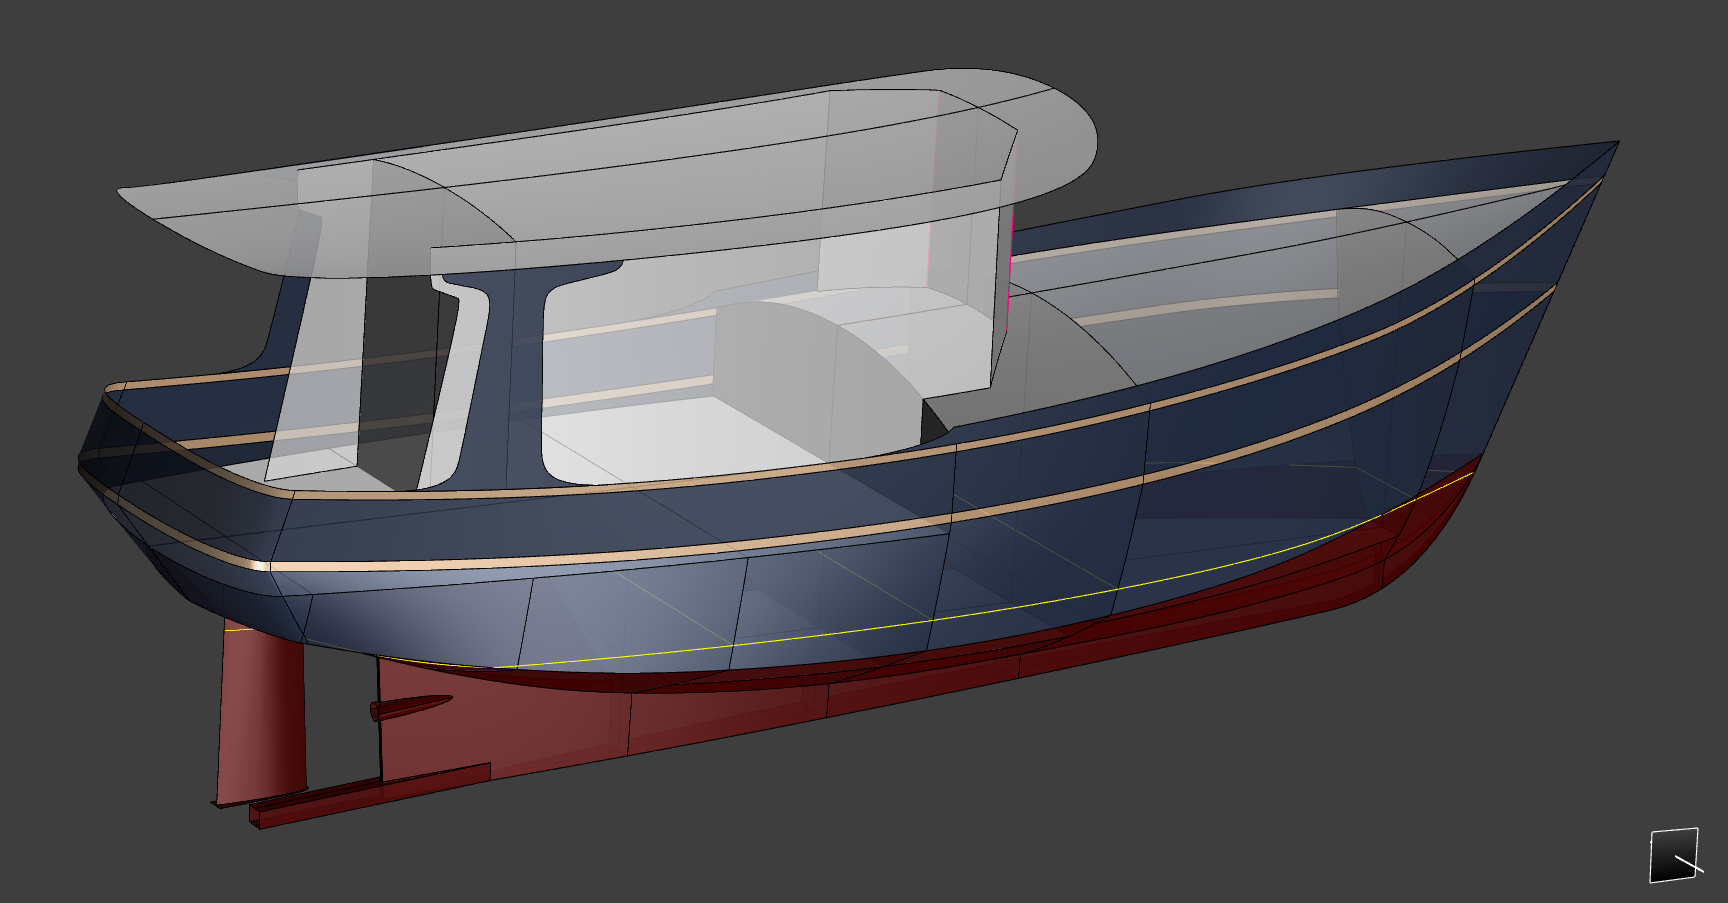 36' Pocket Trawler - VAGABOND - Kasten Marine Design, Inc.